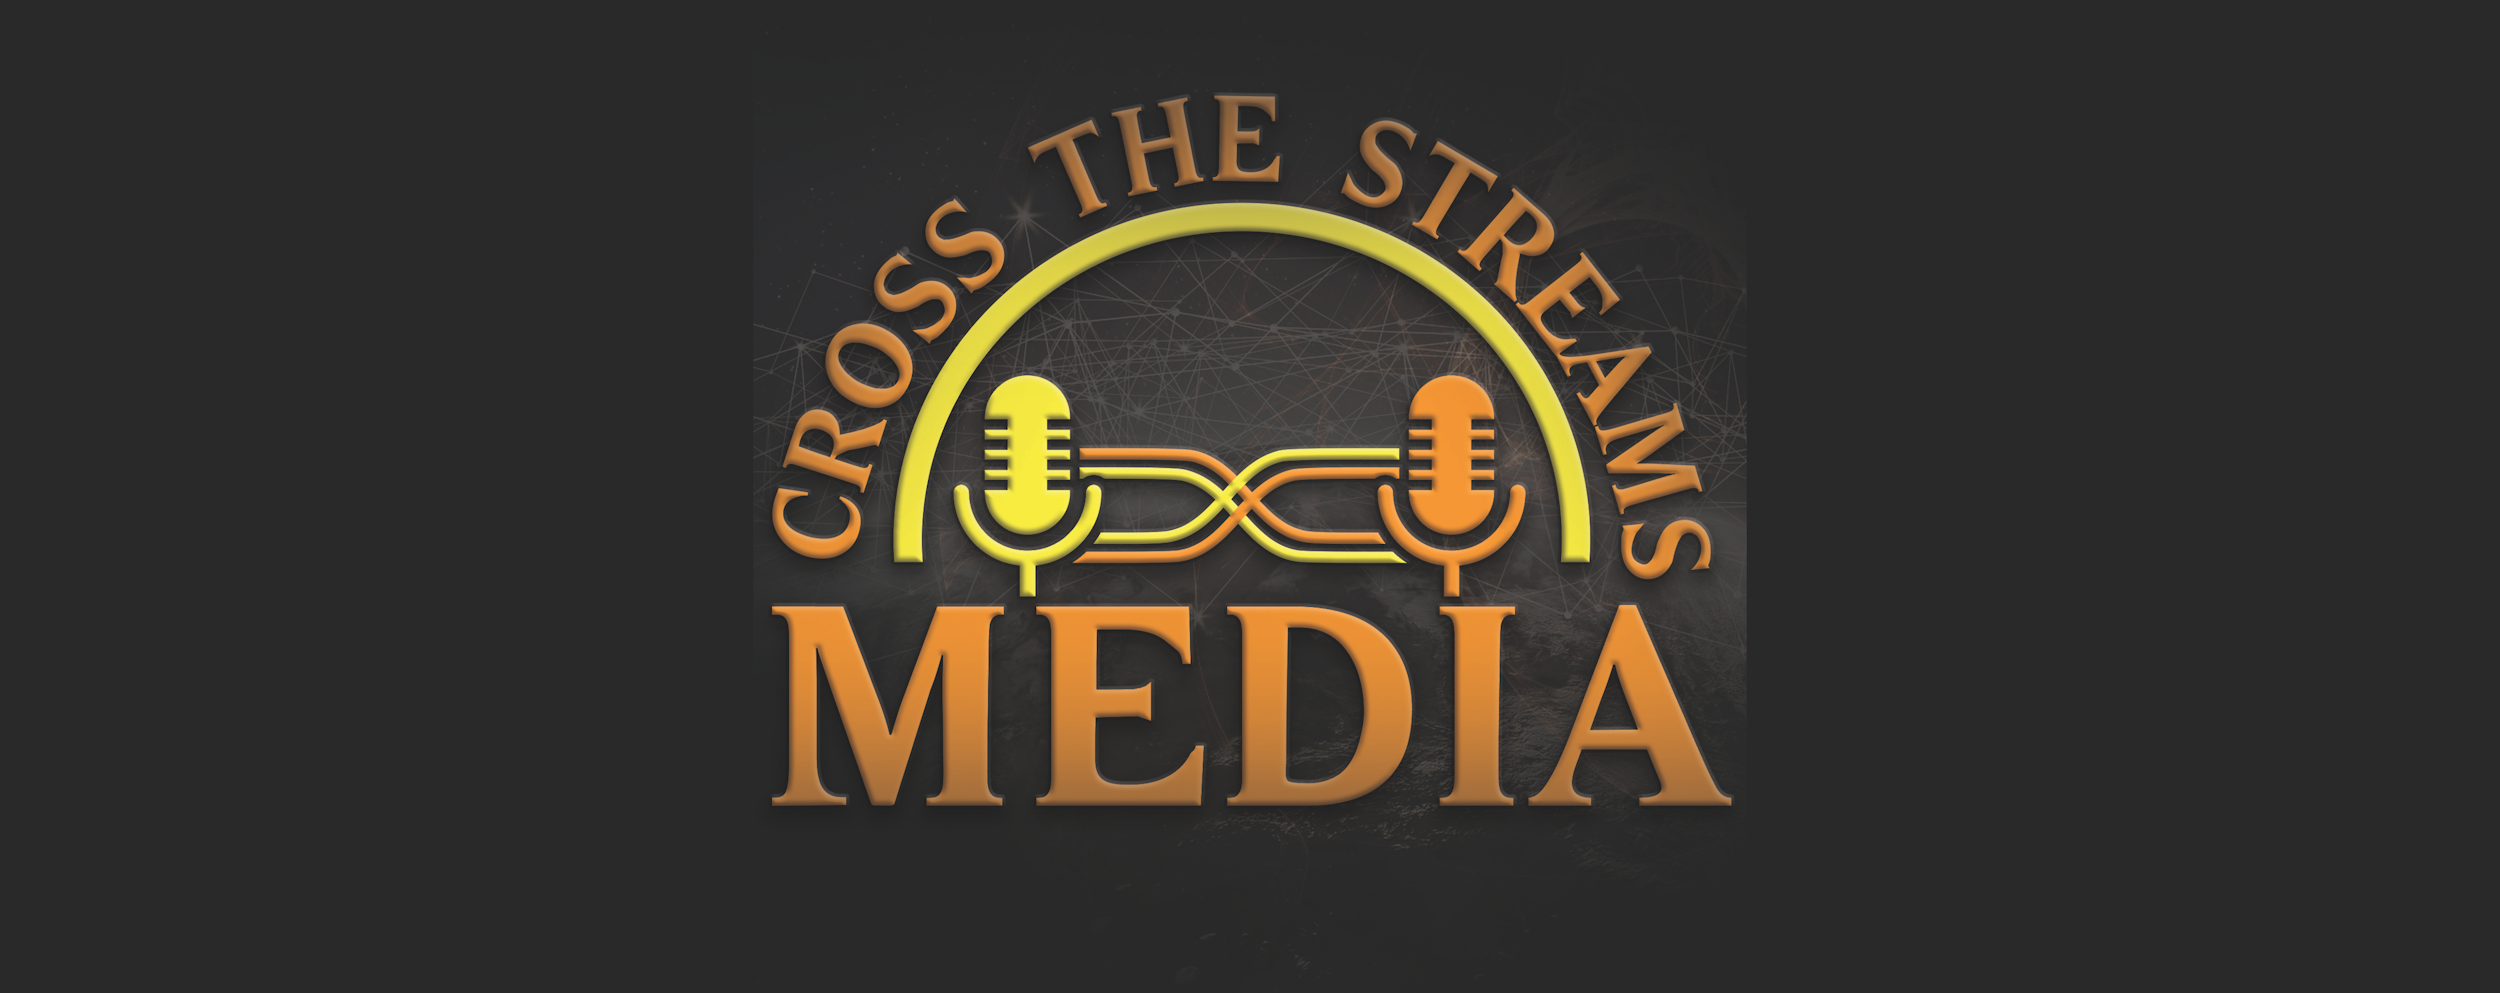 Cross the Streams Media